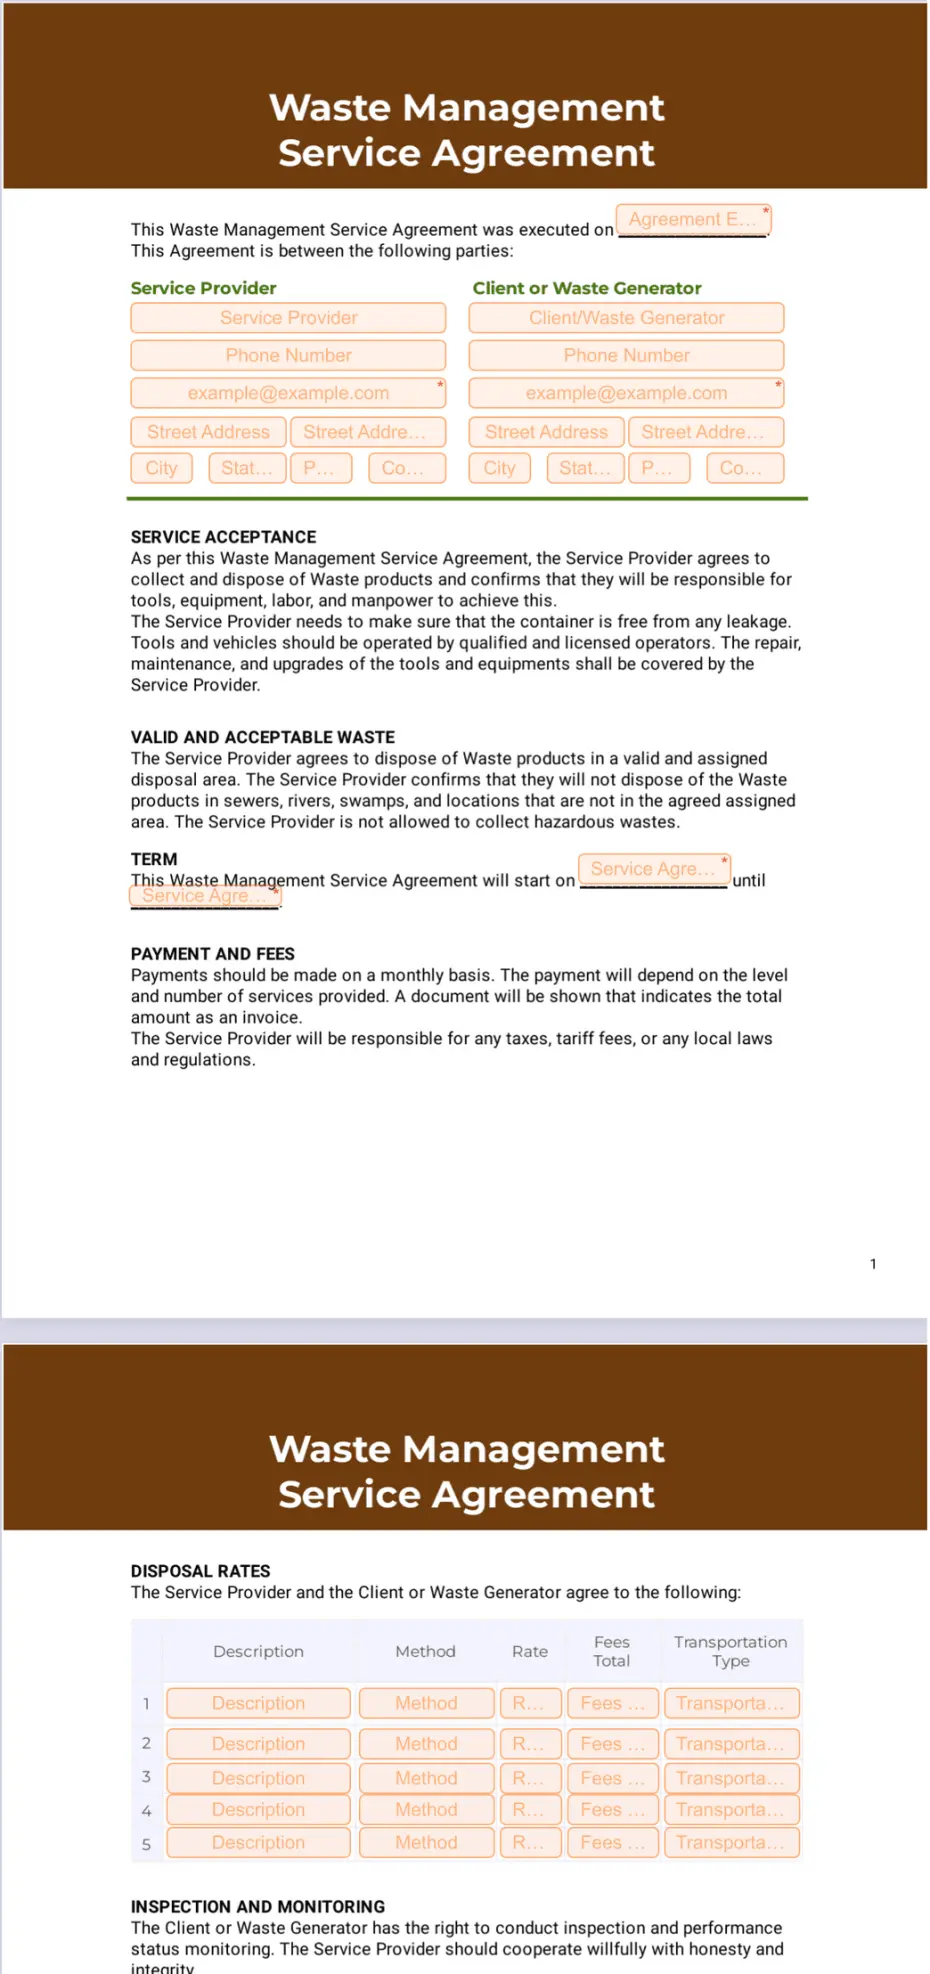 Waste Management Service Agreement